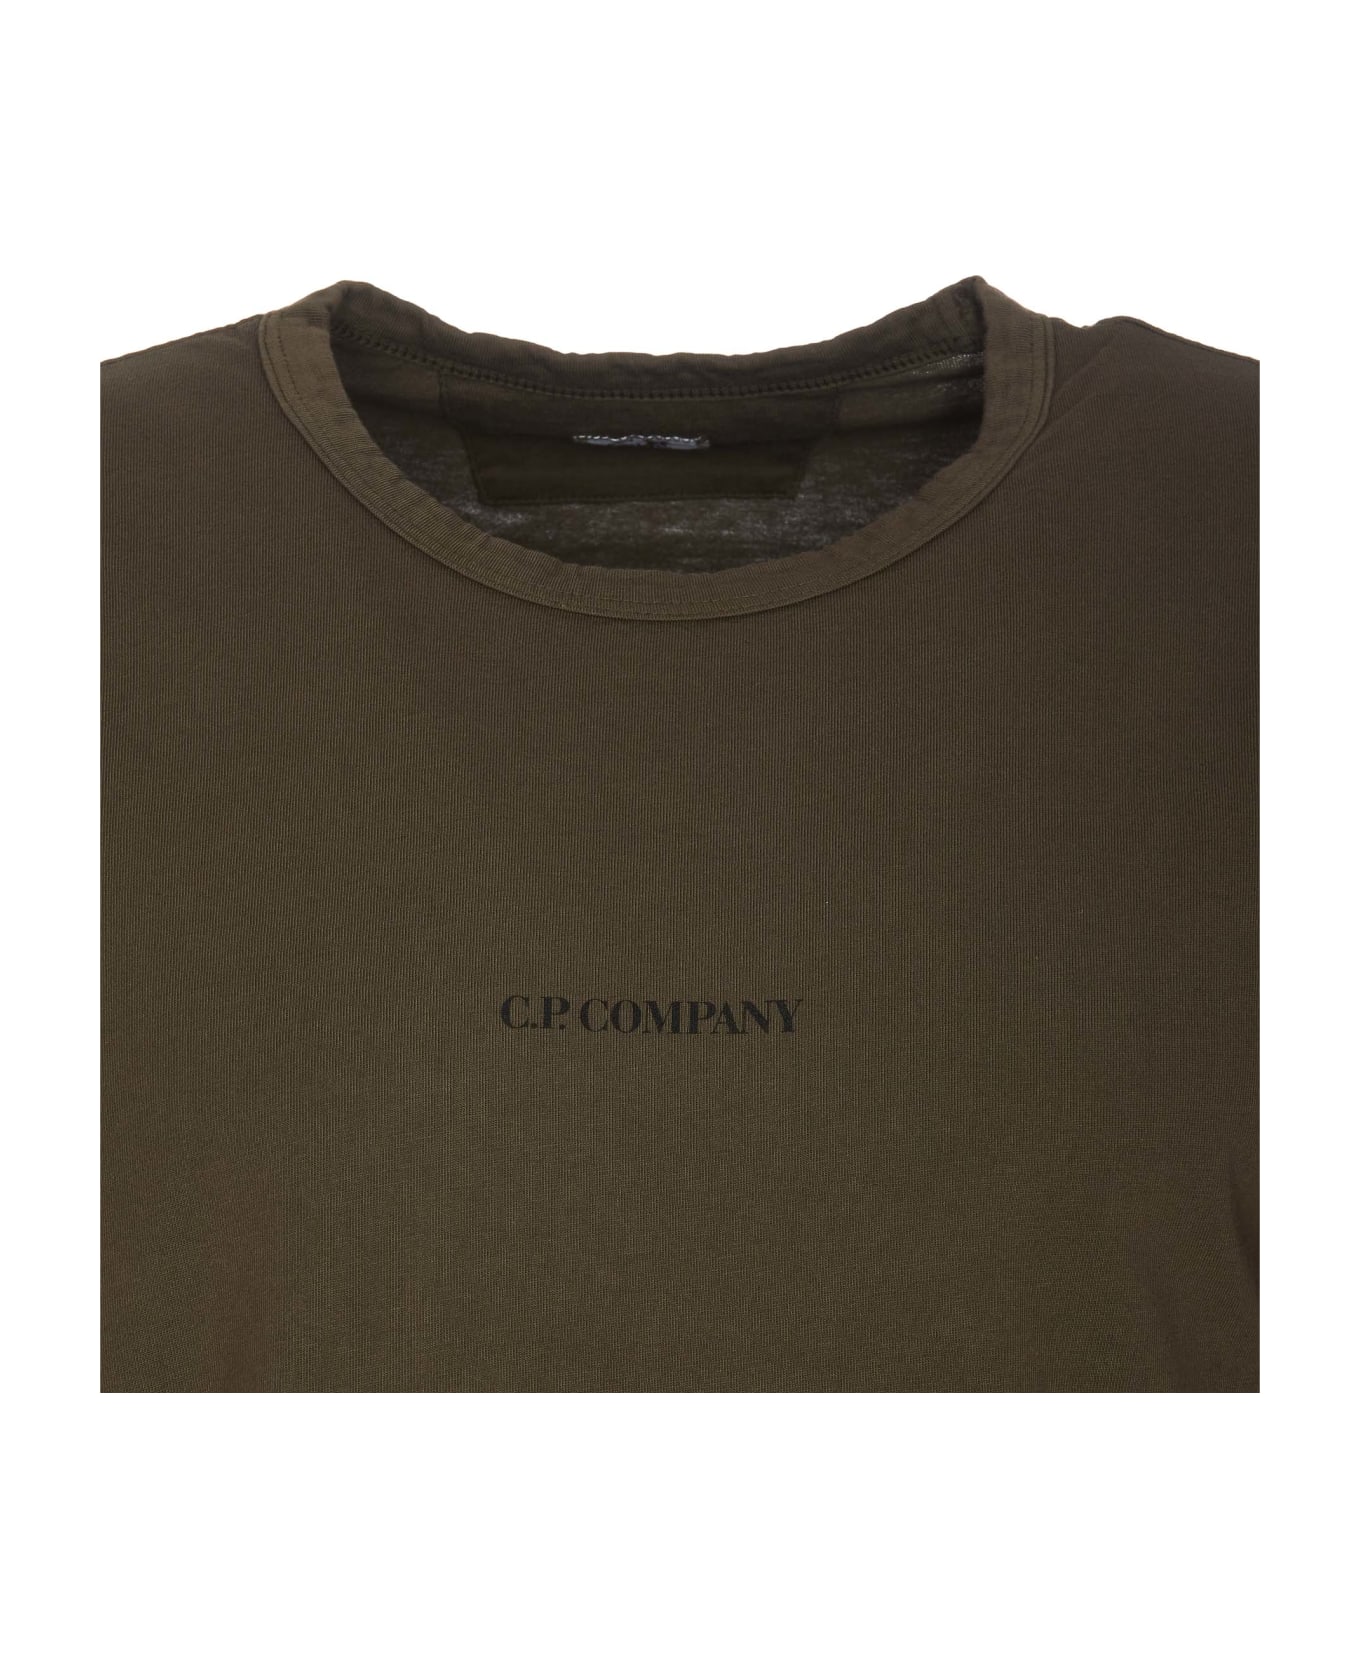 C.P. Company Logo T-shirt - Green